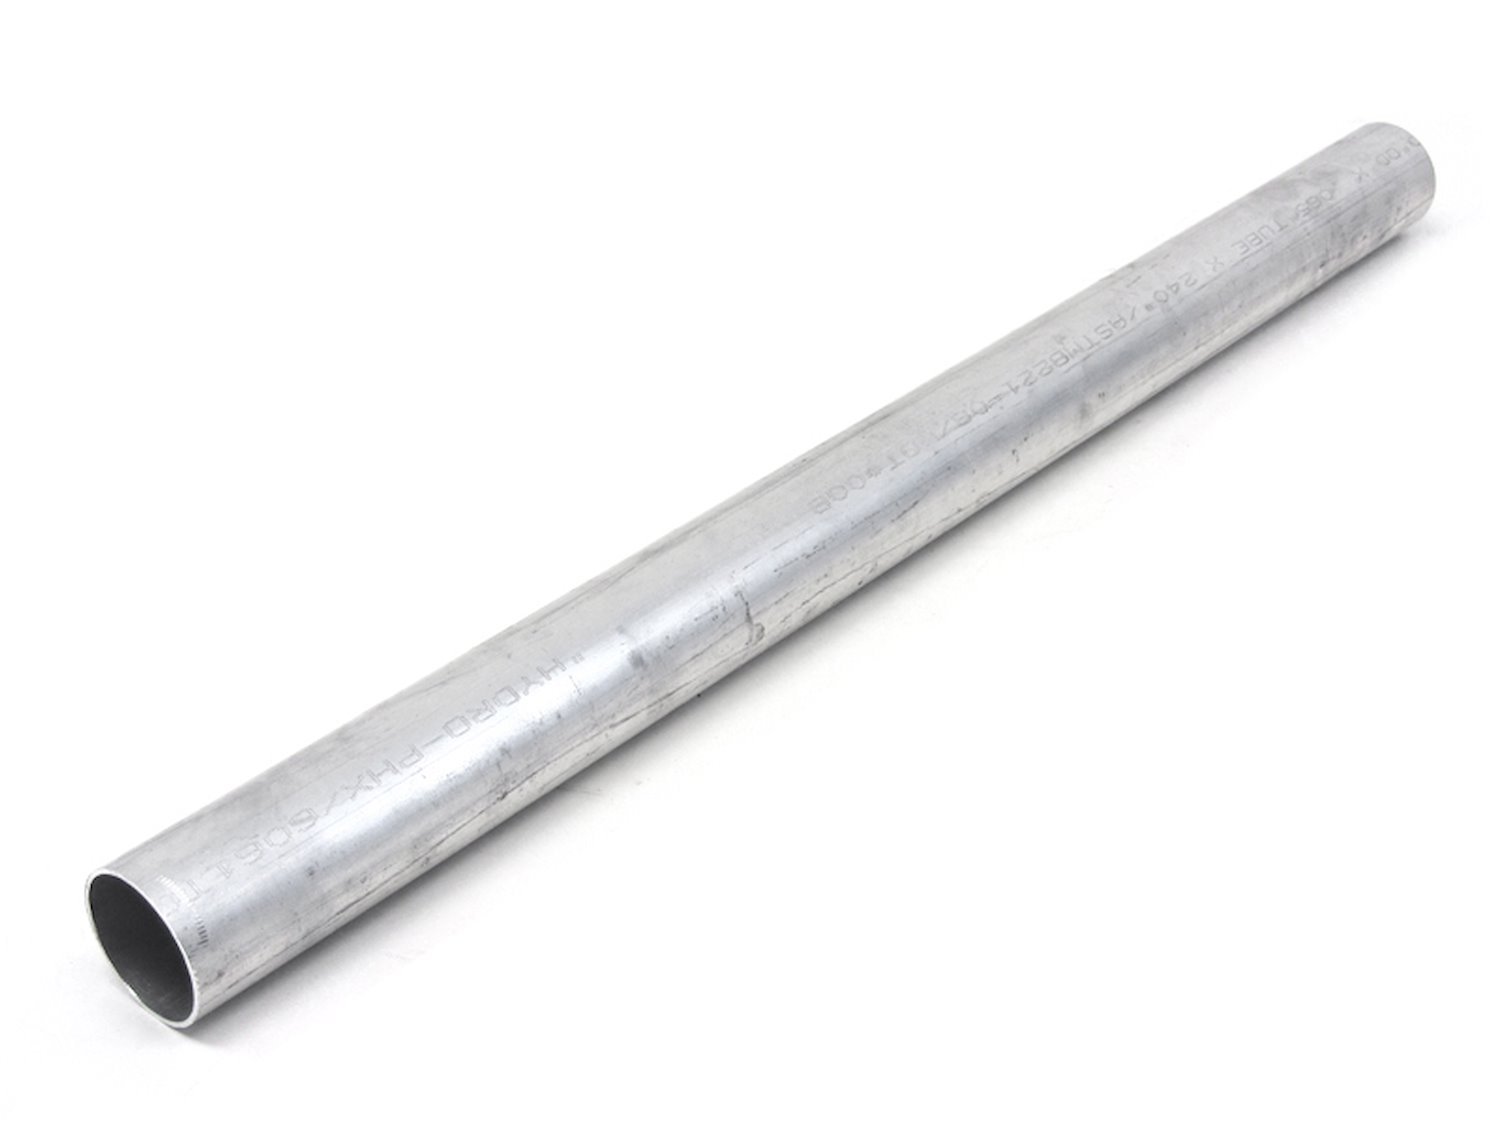 AST-075 Aluminum Tubing, 6061 Aluminum, Straight Tubing, 3/4 in. OD, Seamless, Raw Finish, 1 ft. Long